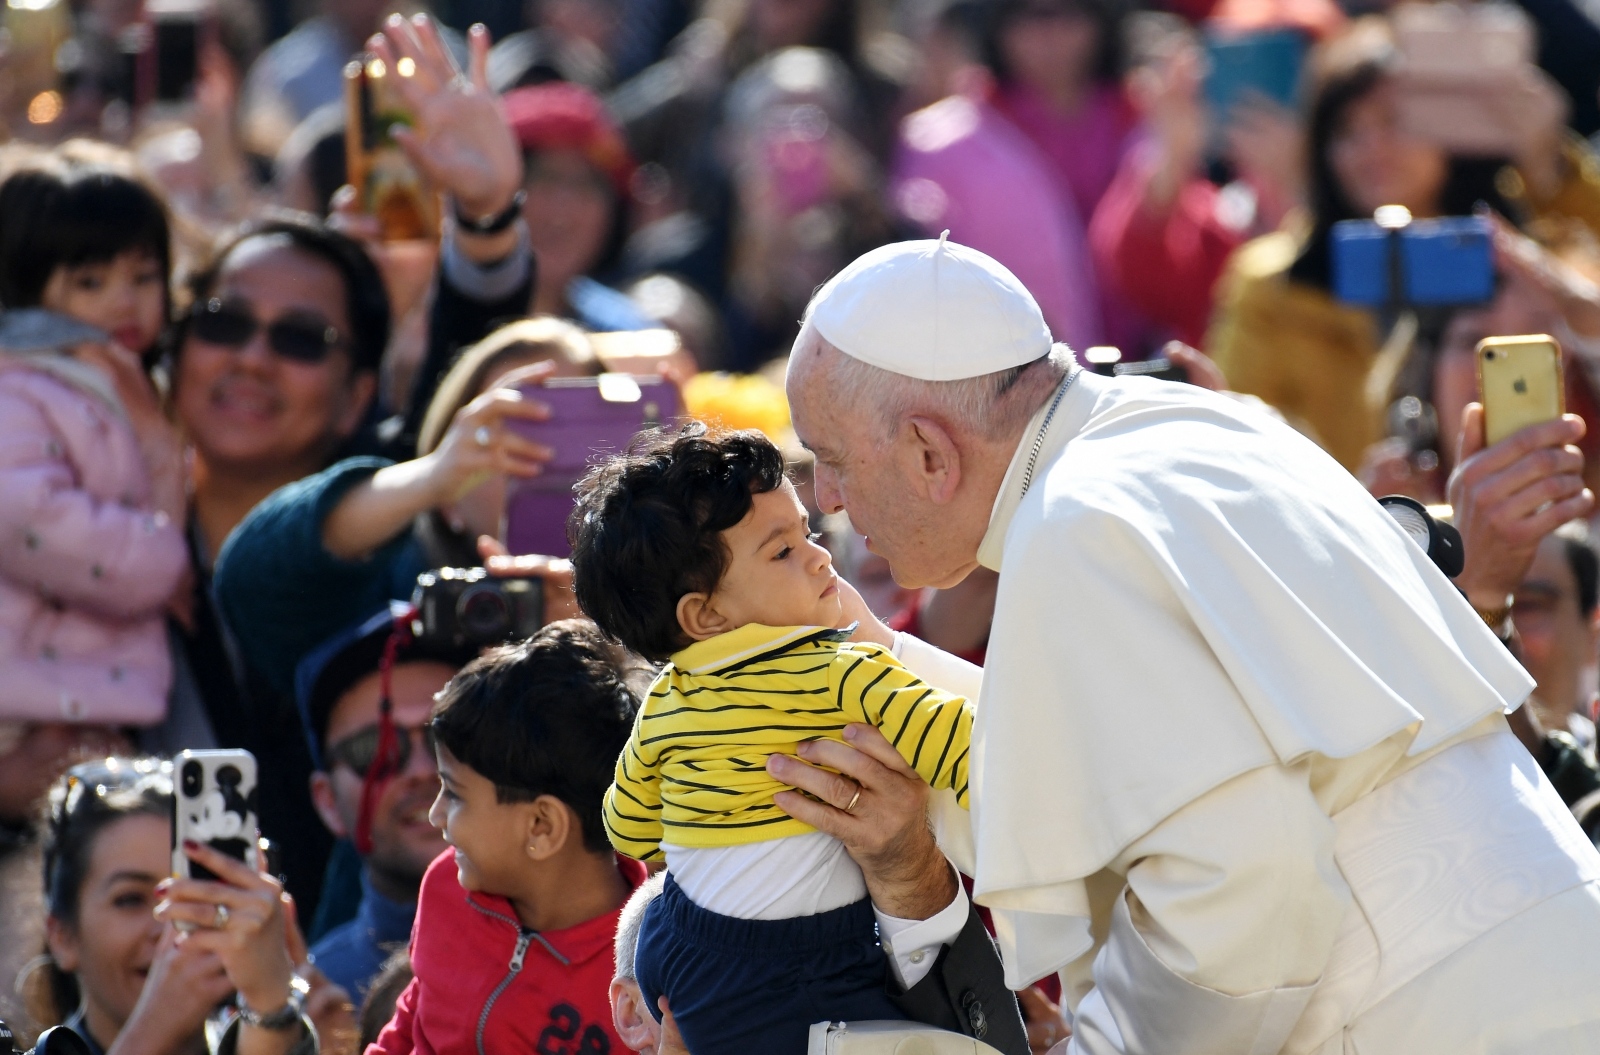 Papež in otroci Vir:Pixsell